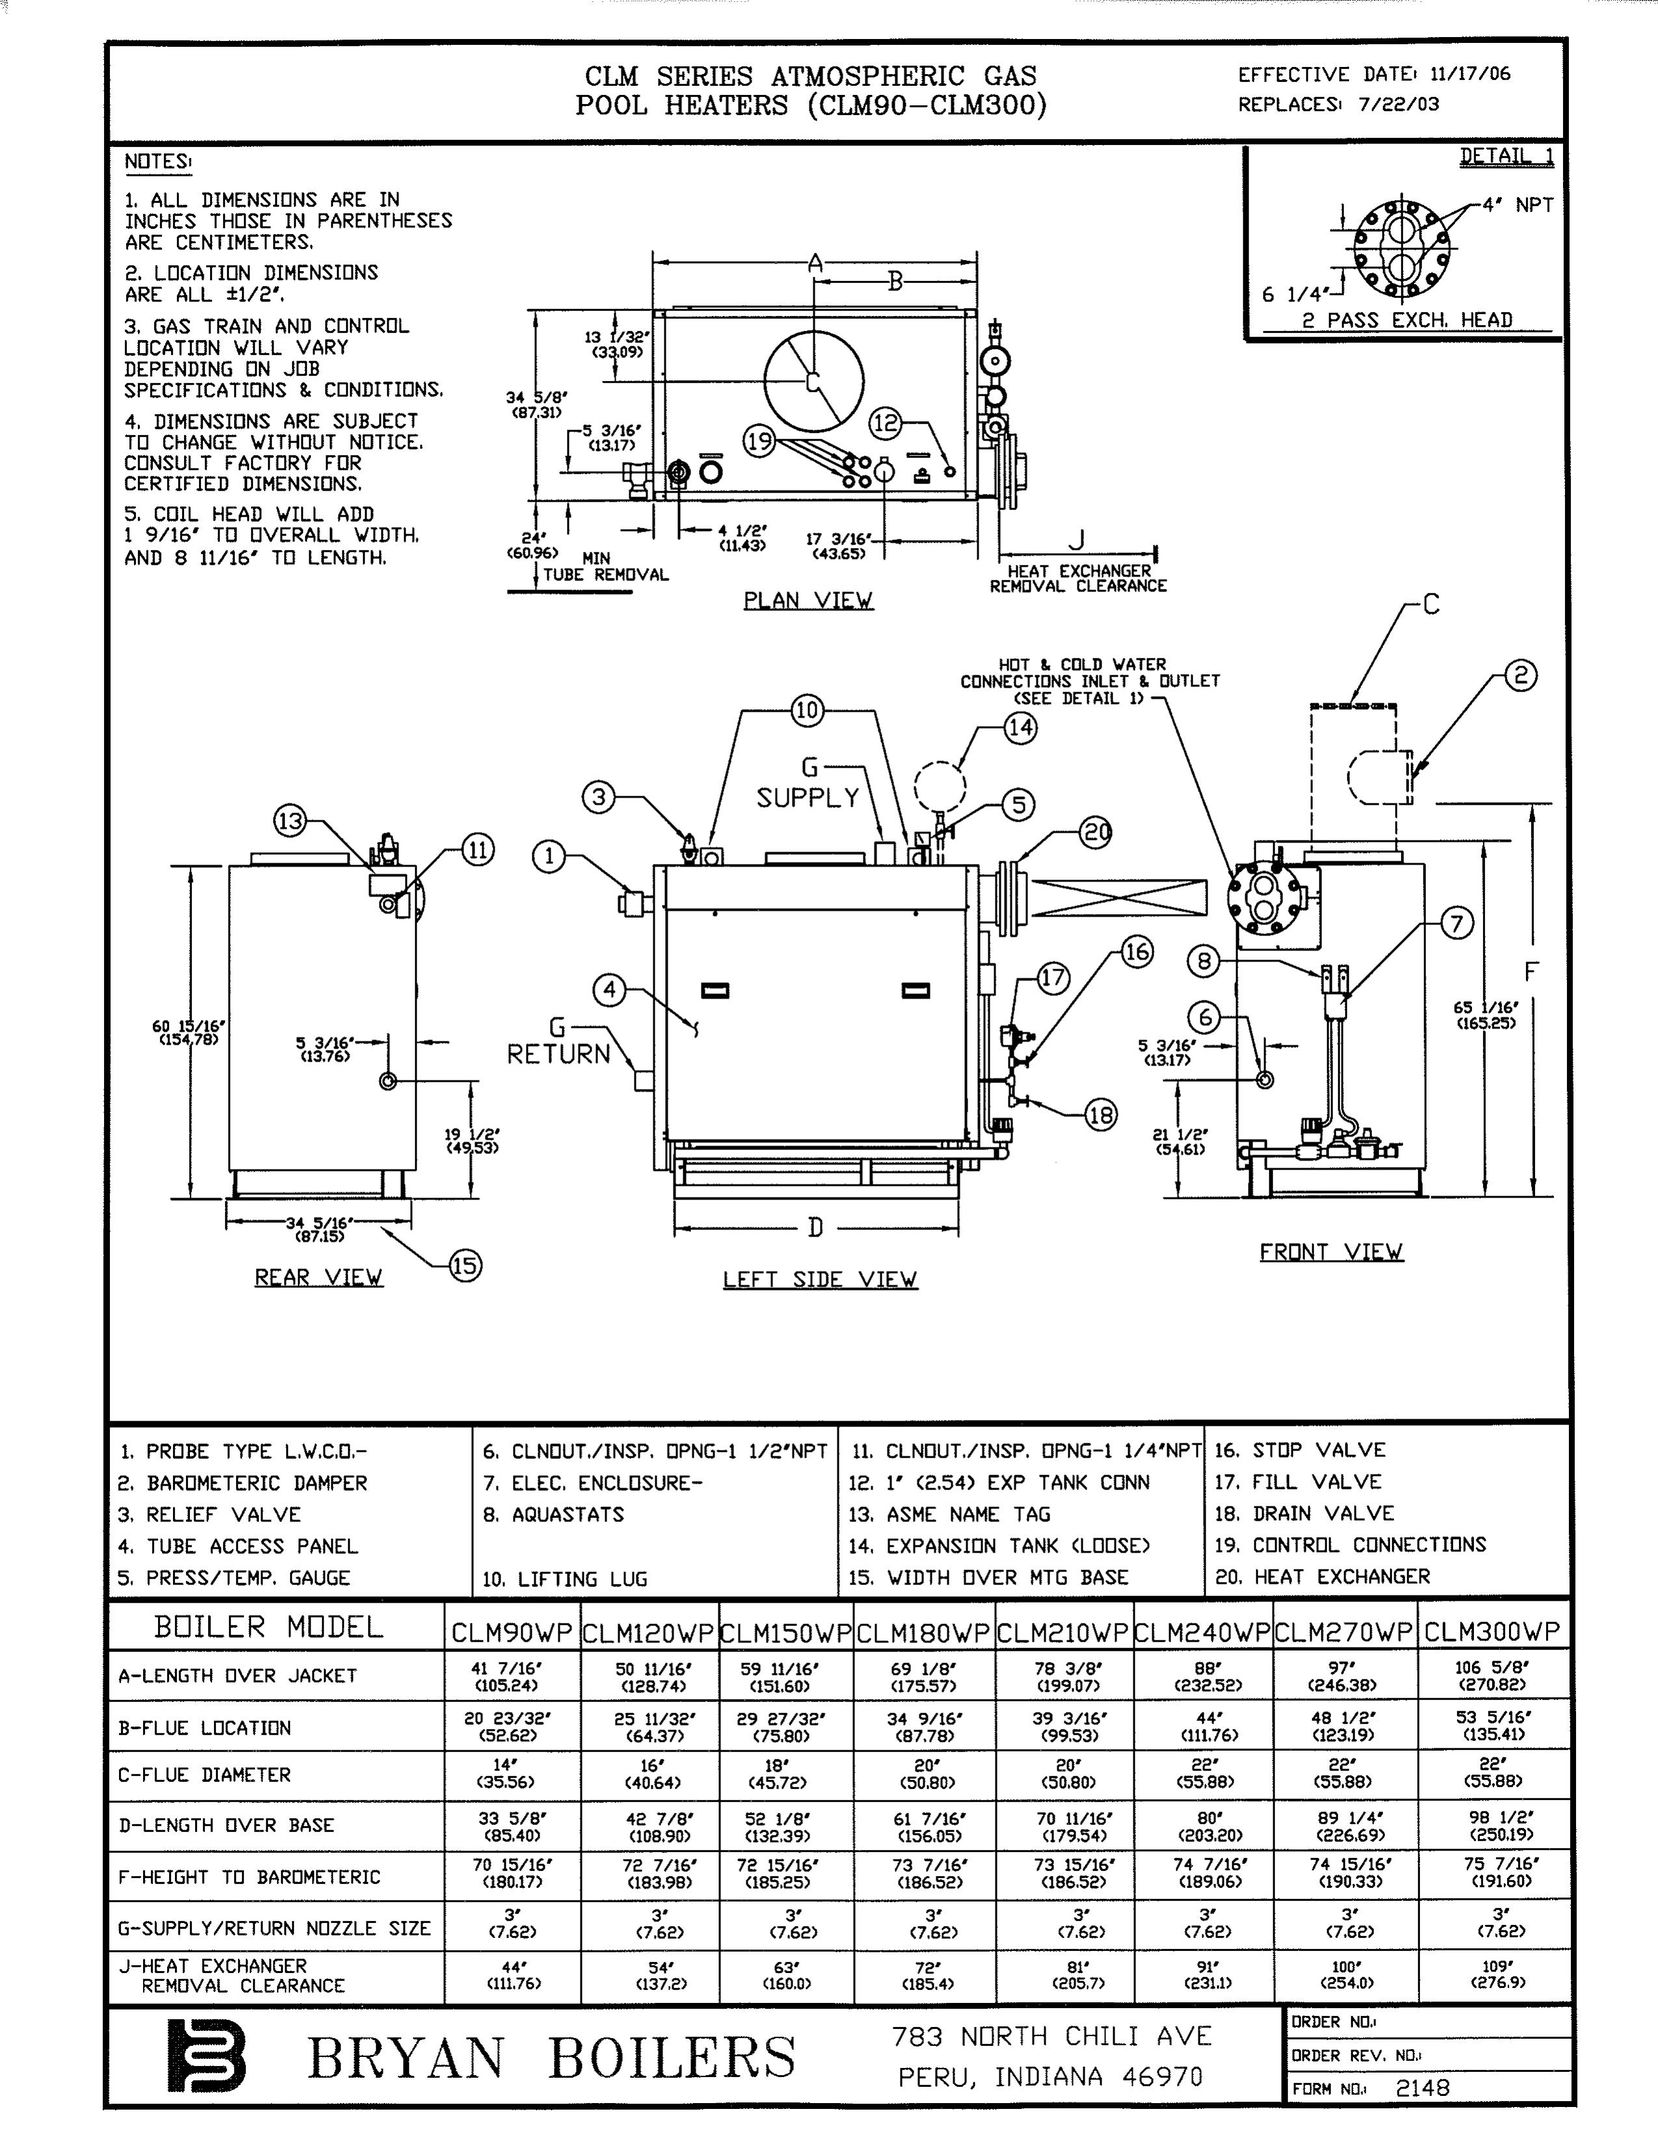 Bryan Boilers CLM270WP Gas Heater User Manual